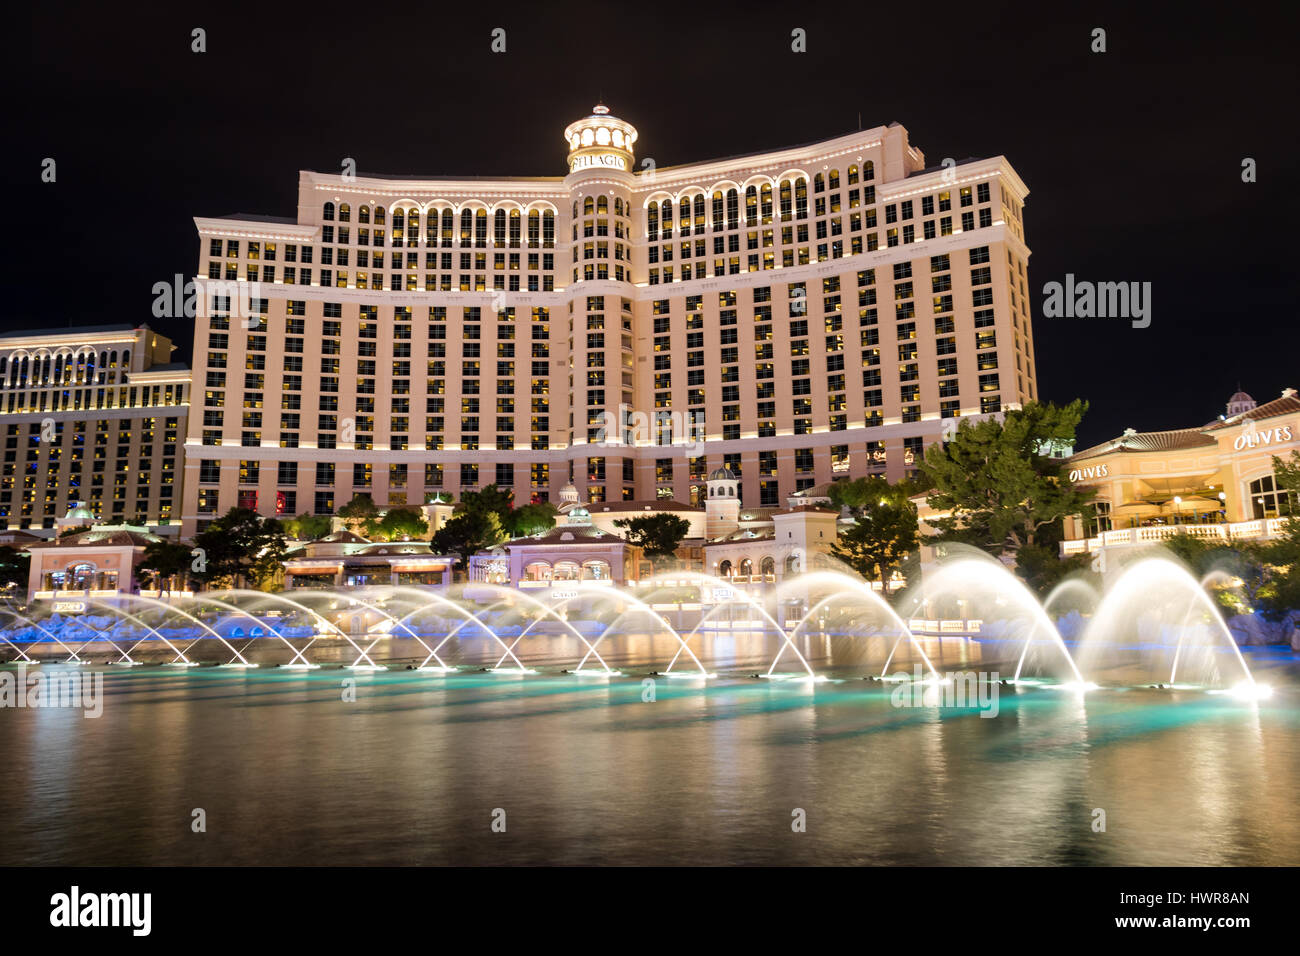 Dancing Fountains at Bellagio Hotel Casino at night - Las Vegas, Nevada, USA Stock Photo